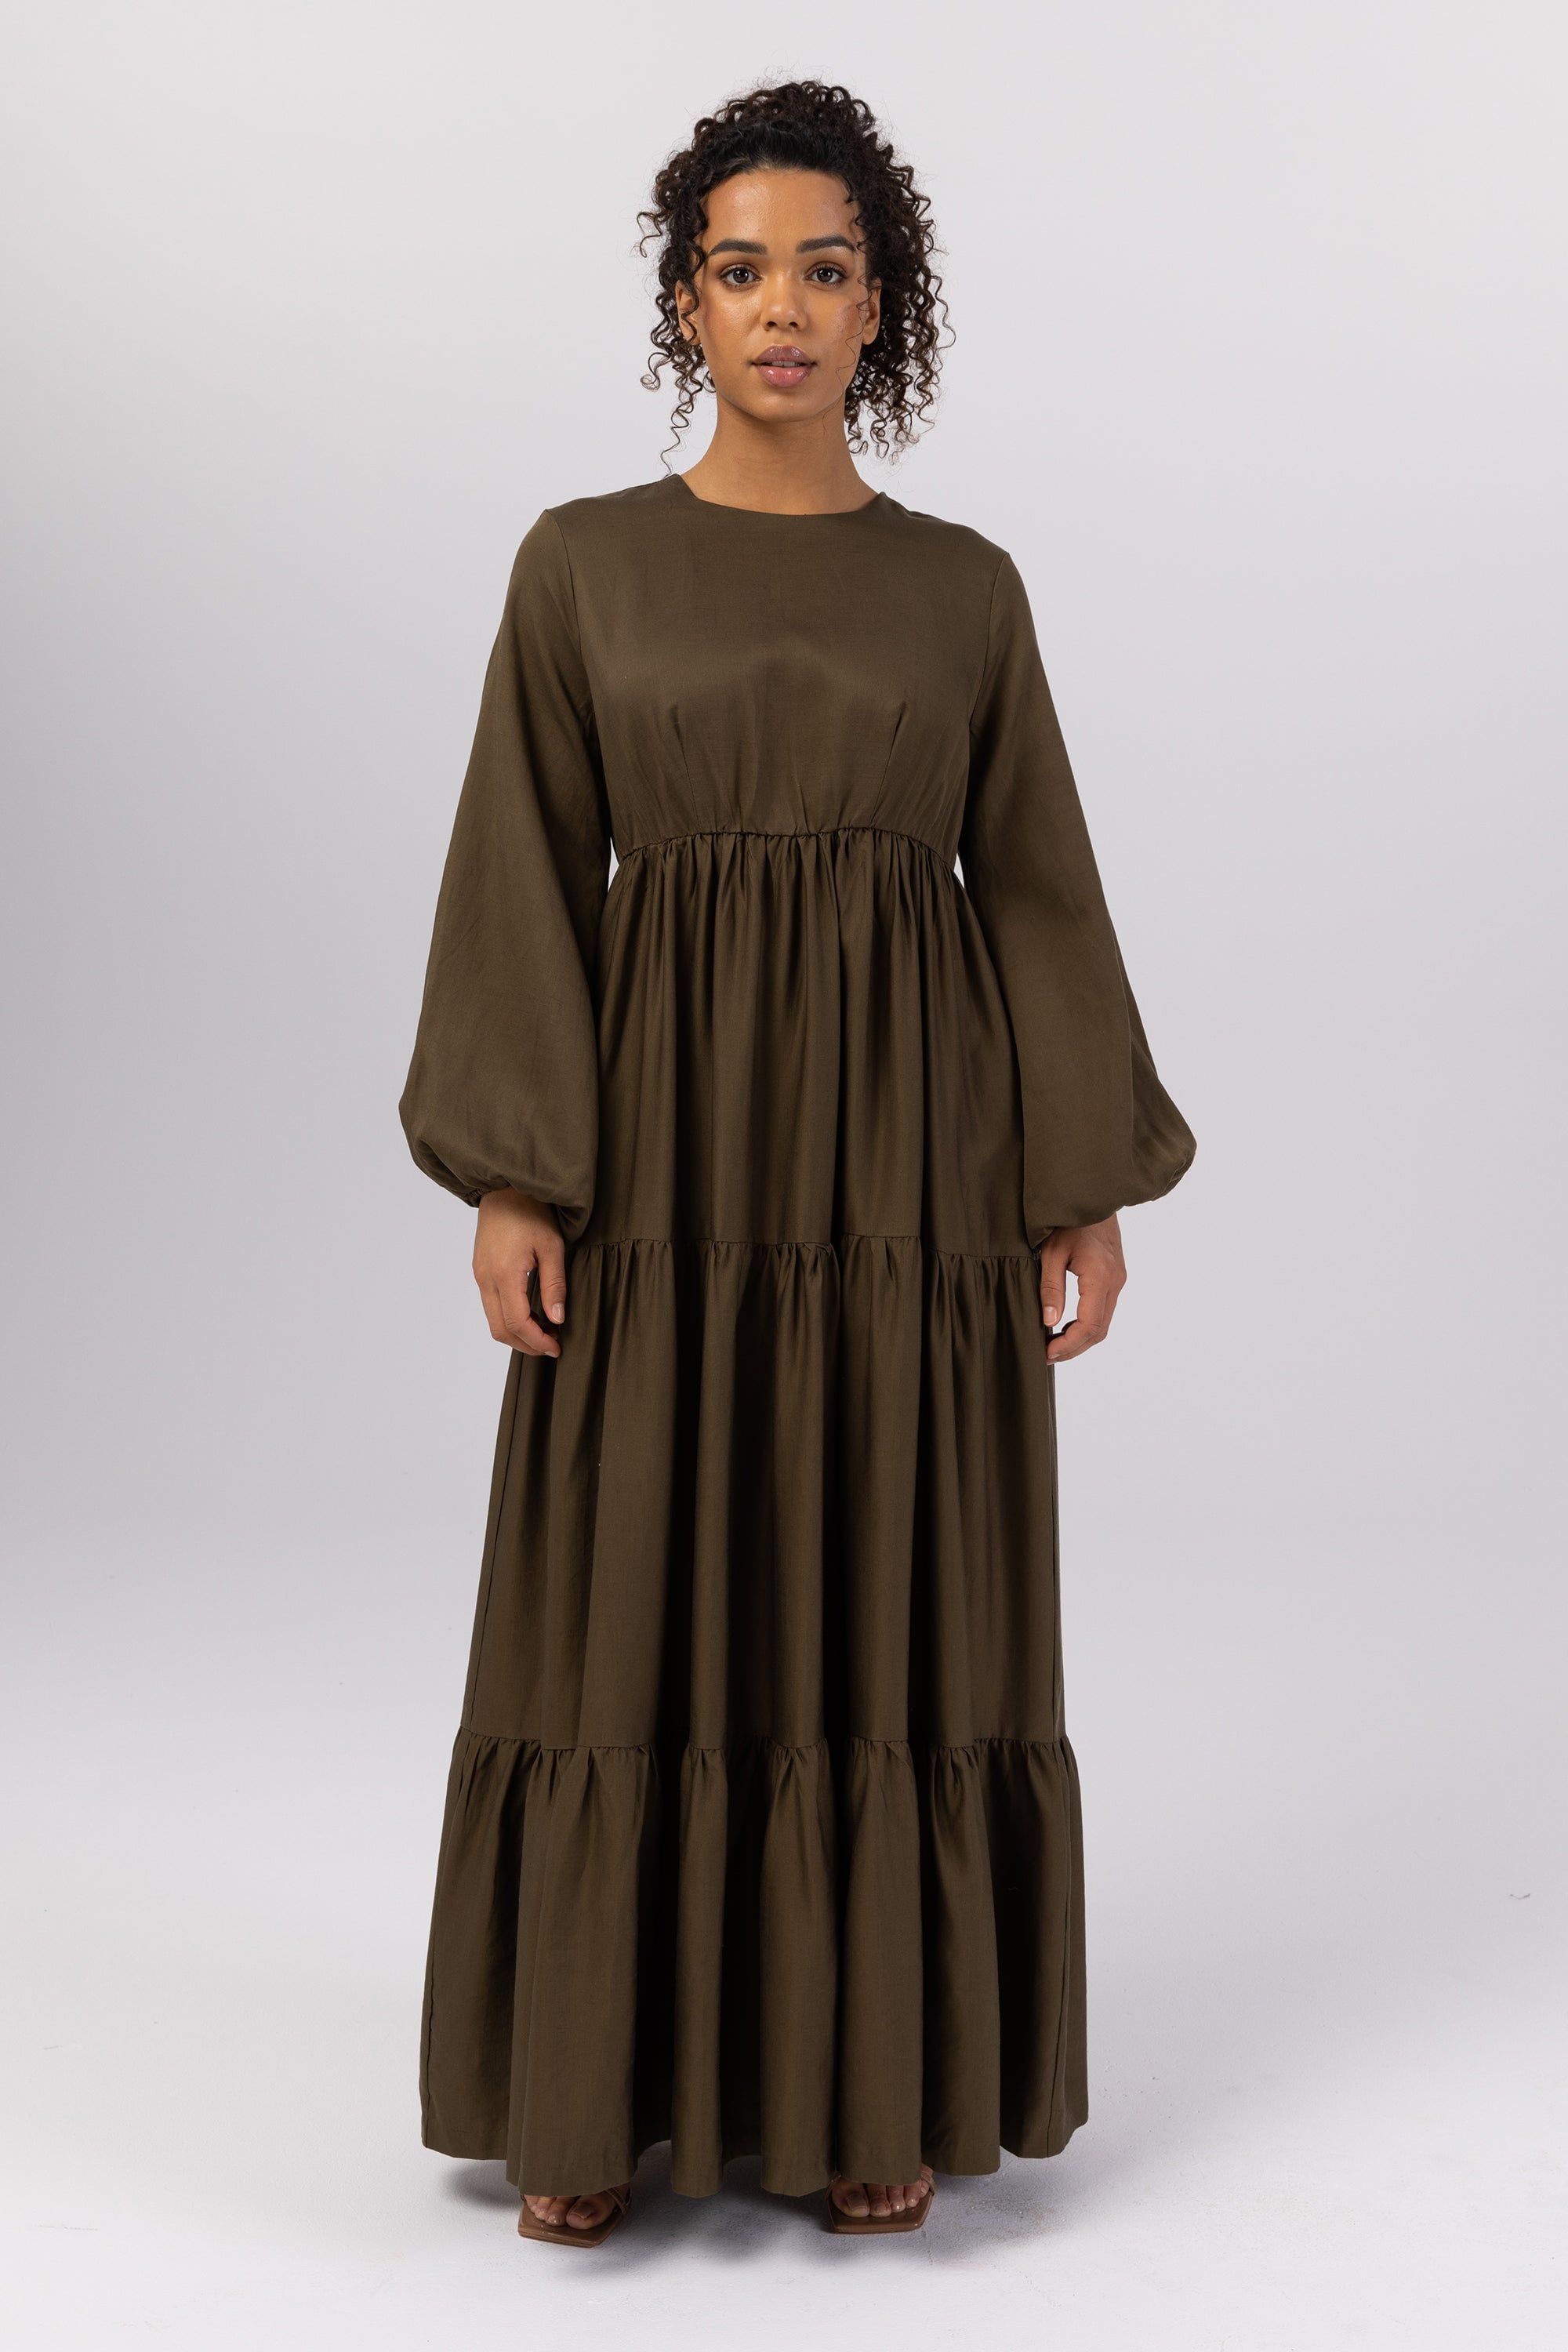 Hunter Green Maxi Dress - Long Sleeve Maxi Dress - Tiered Dress